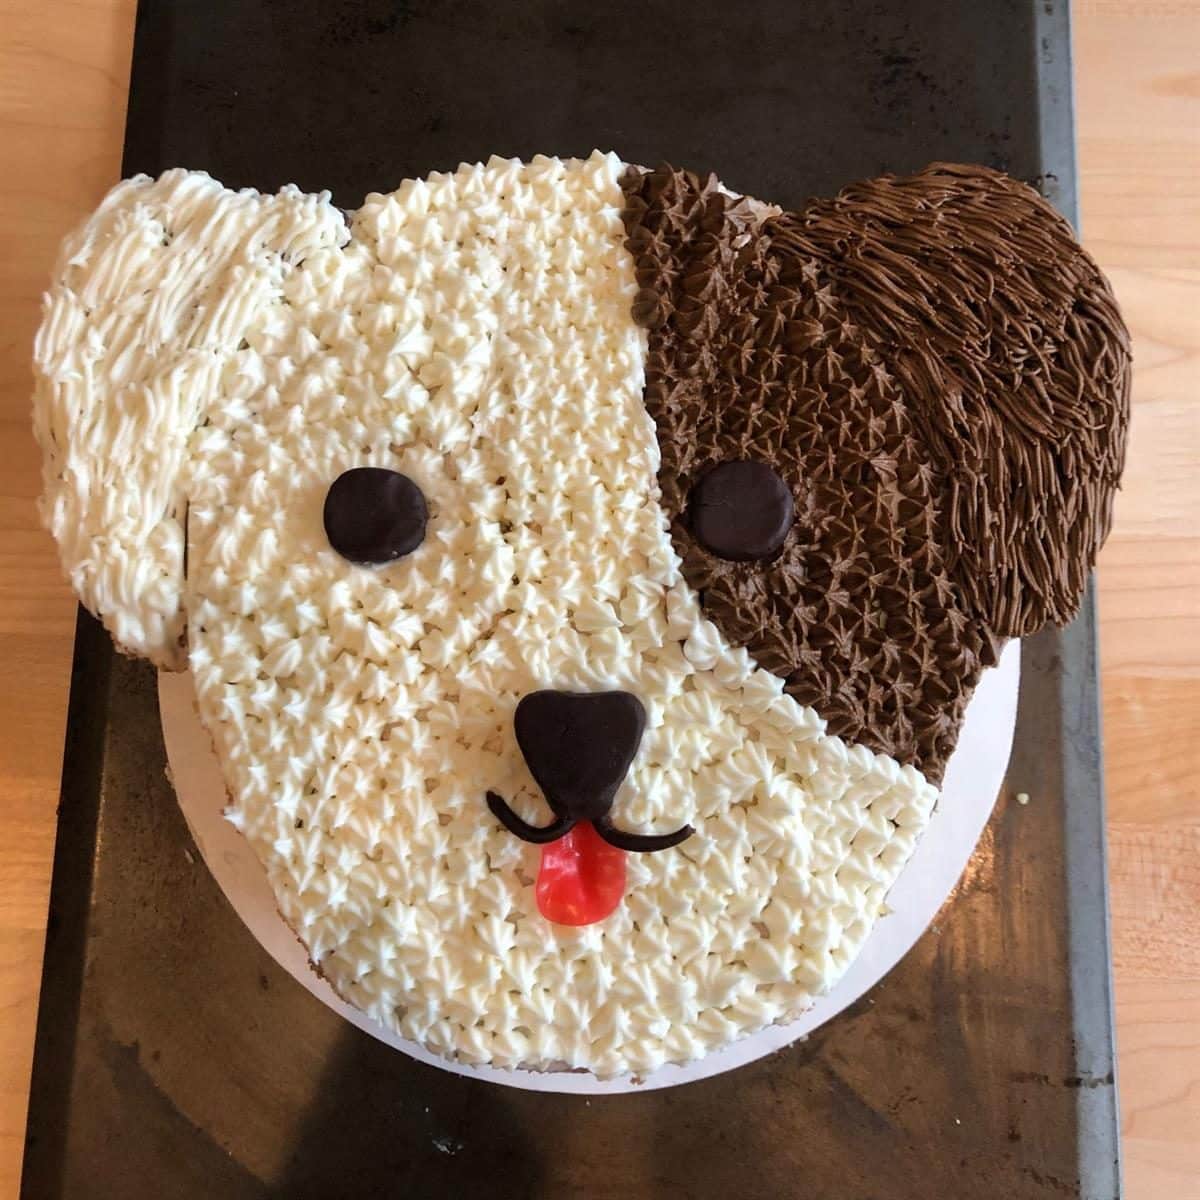 Puppy Dog Cake Recipe: How to Make It